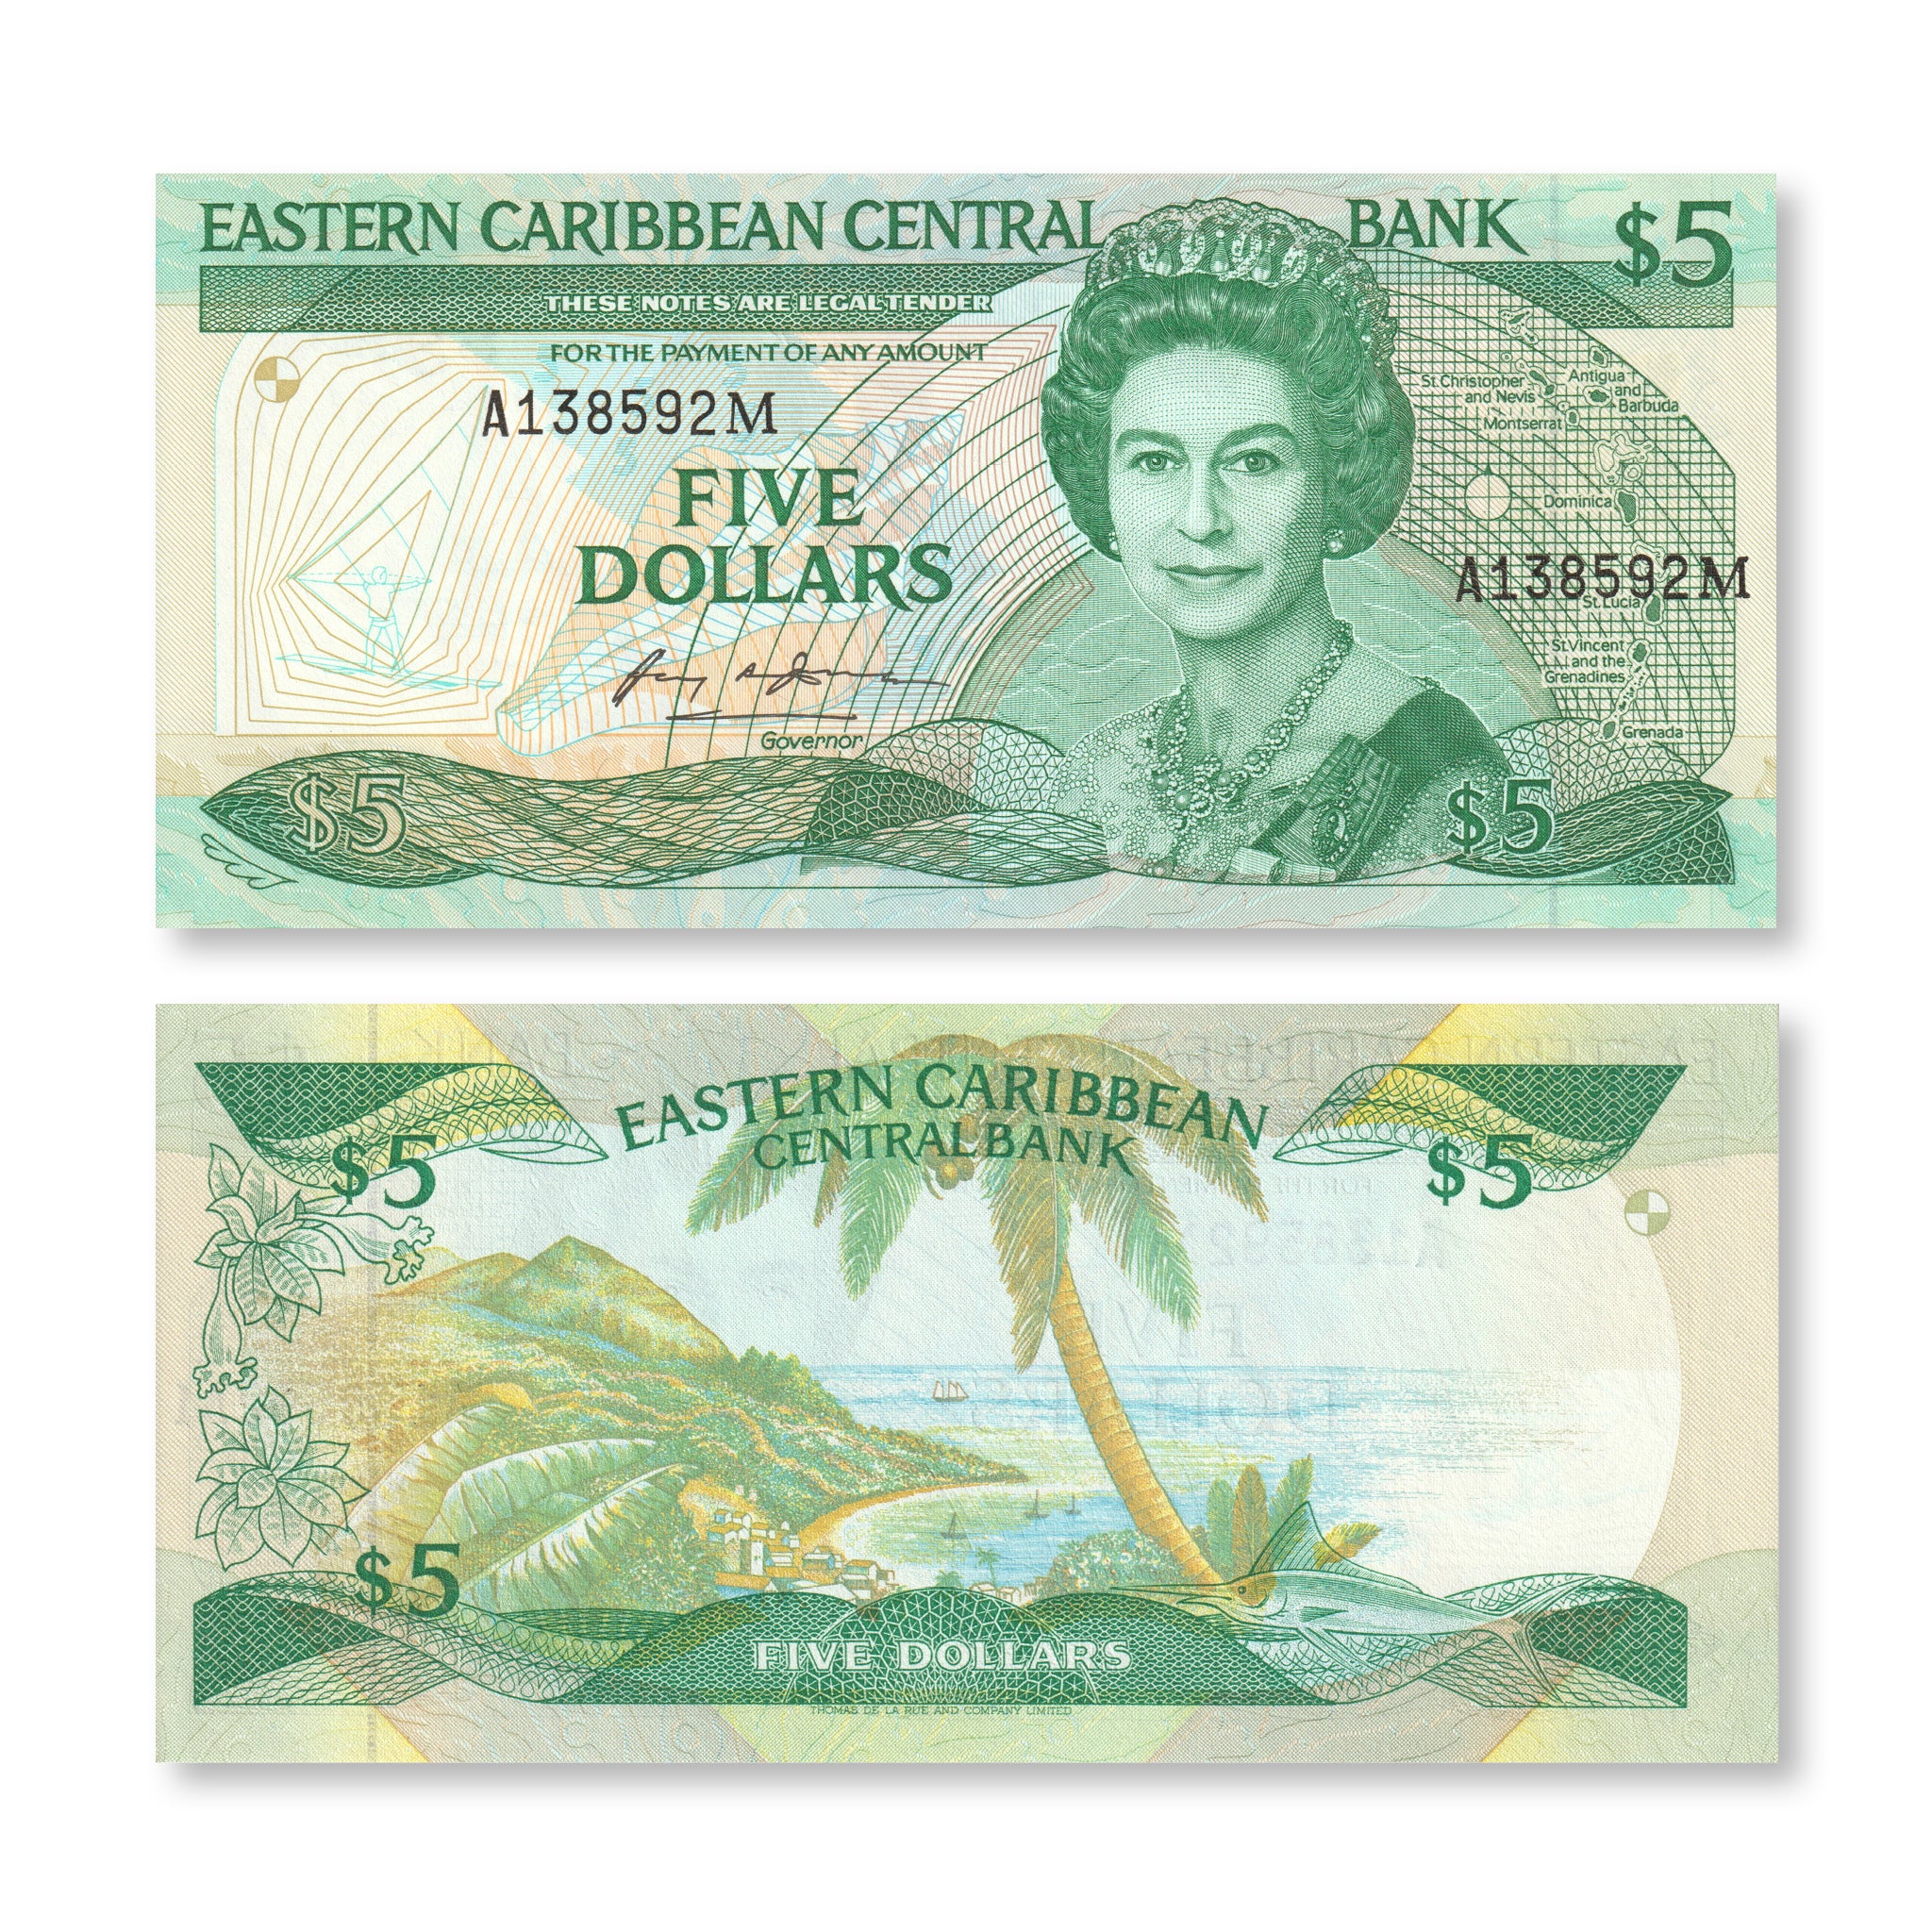 East Caribbean States 5 Dollars, 1987, B202m, P18m, UNC - Robert's World Money - World Banknotes